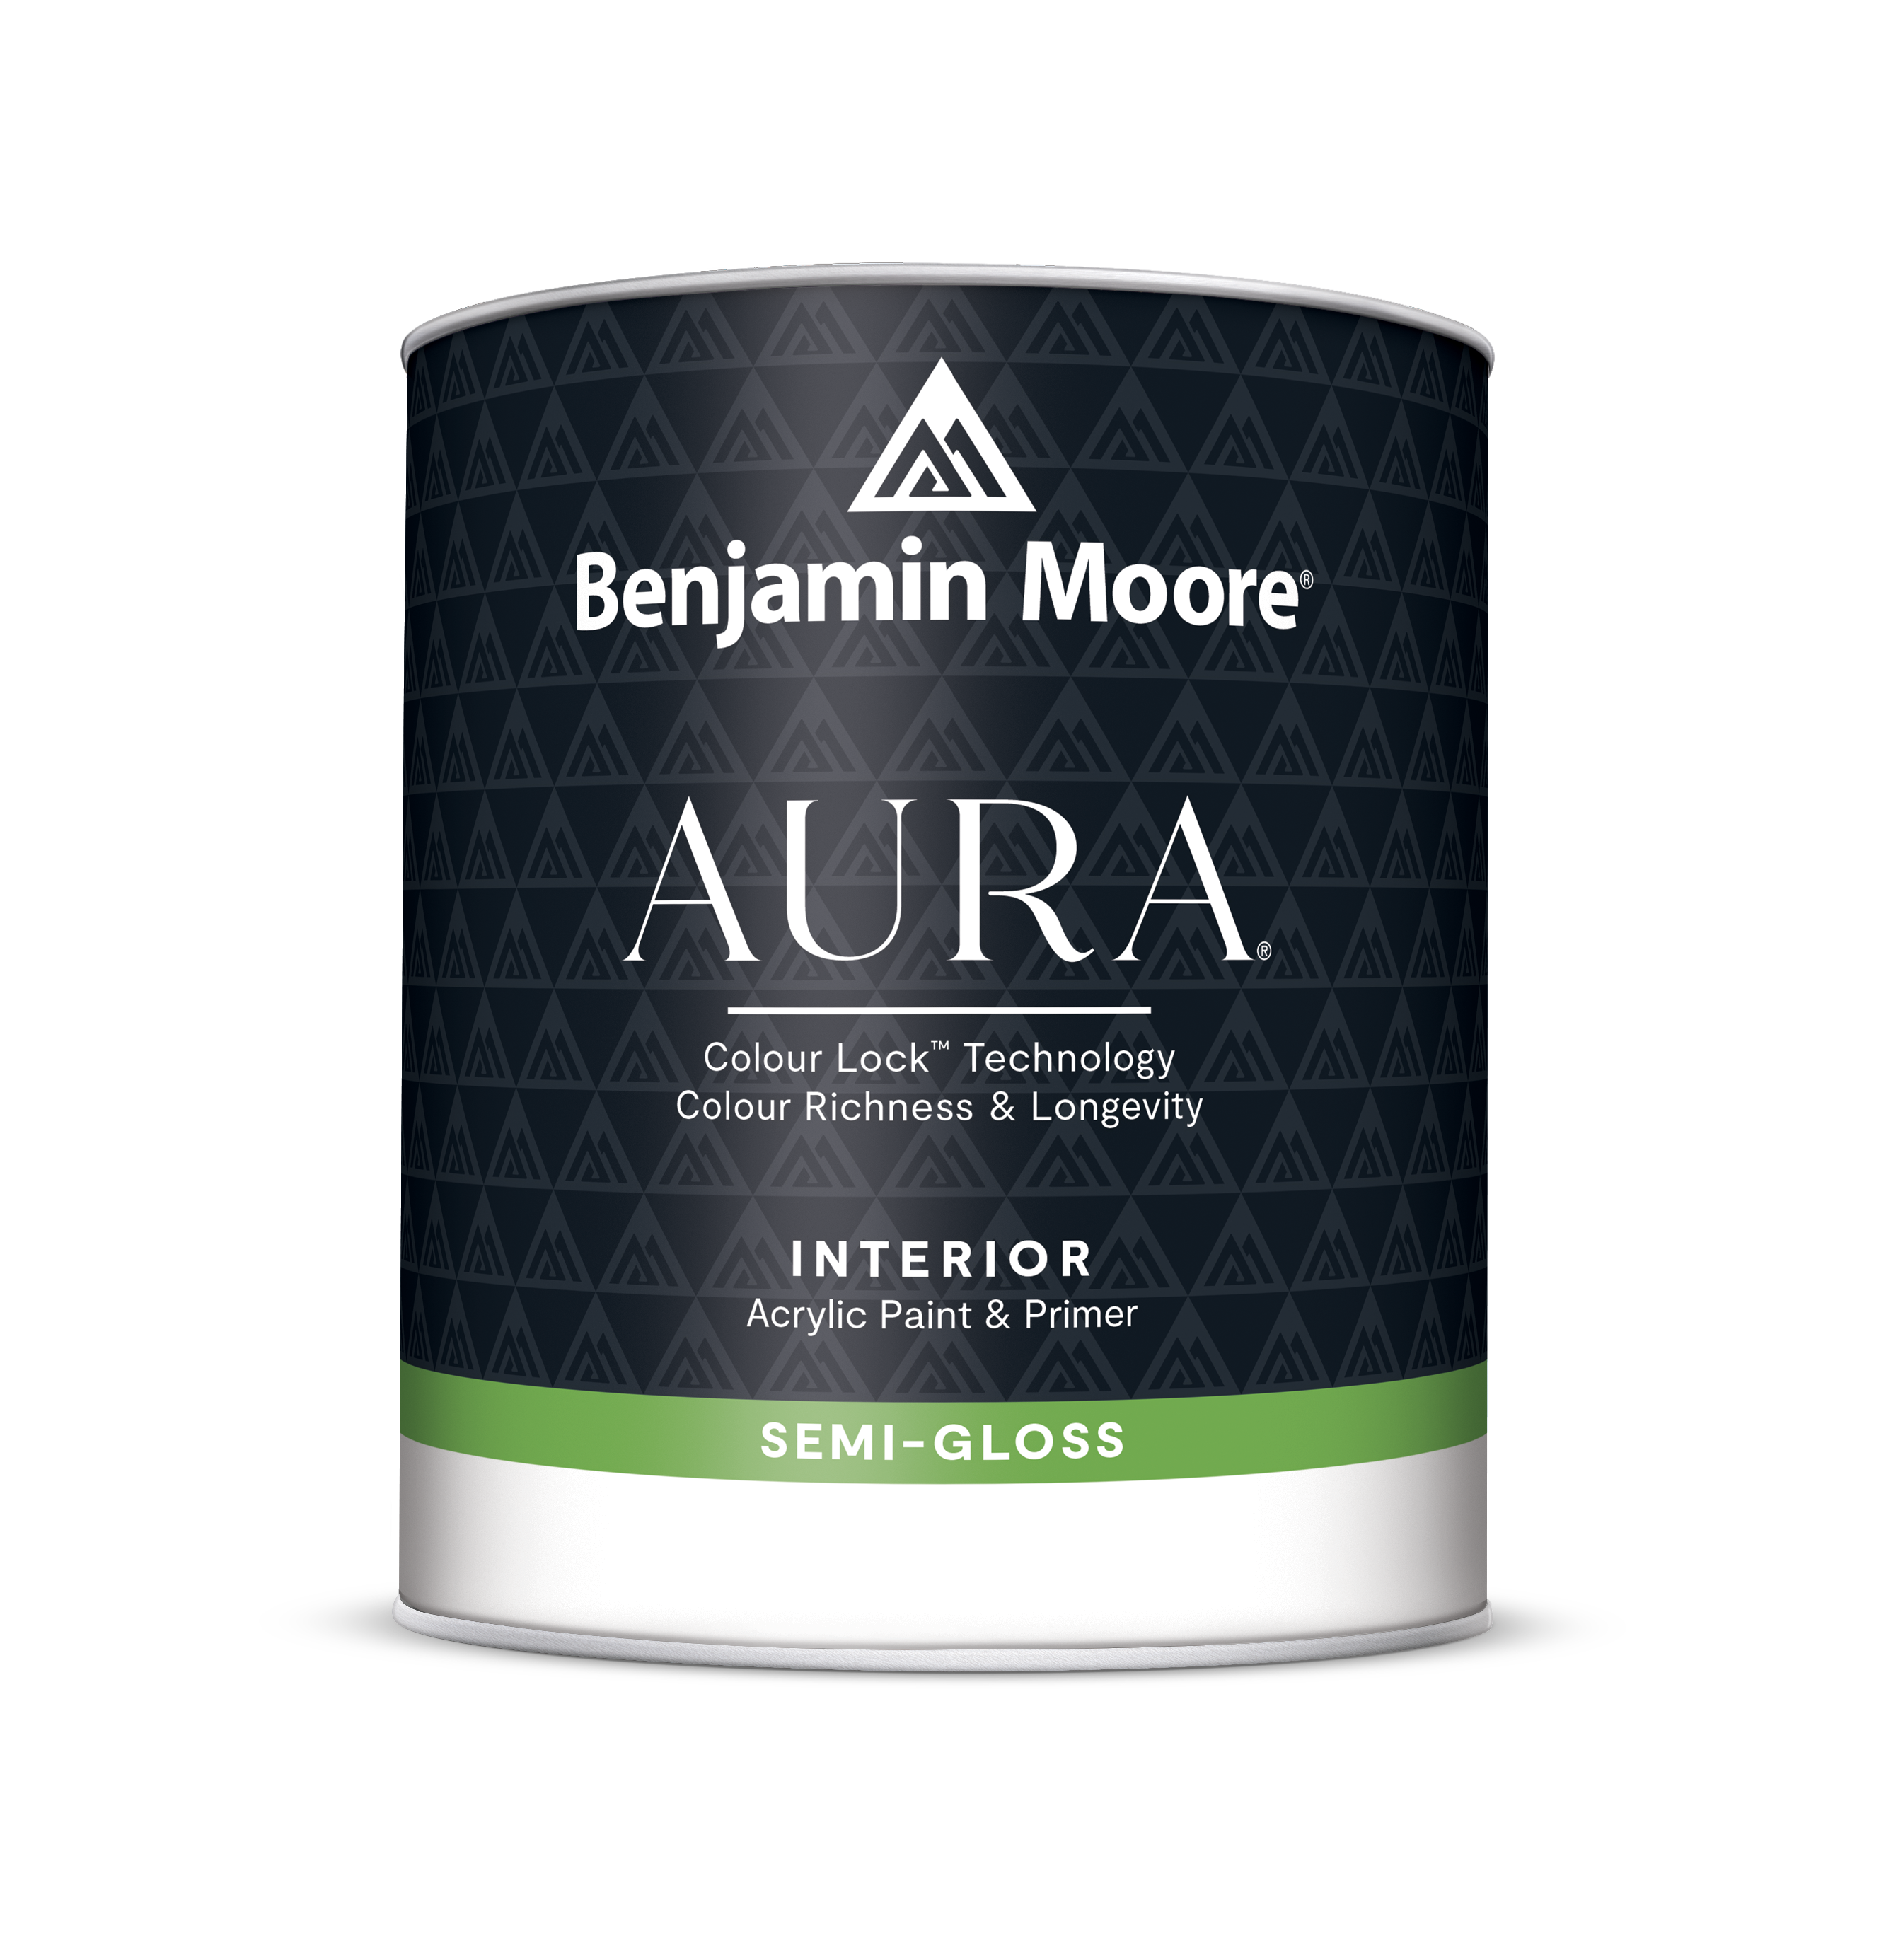 Benjamin Moore AURA® Waterborne Interior Paint bucket in Semi-Gloss finish